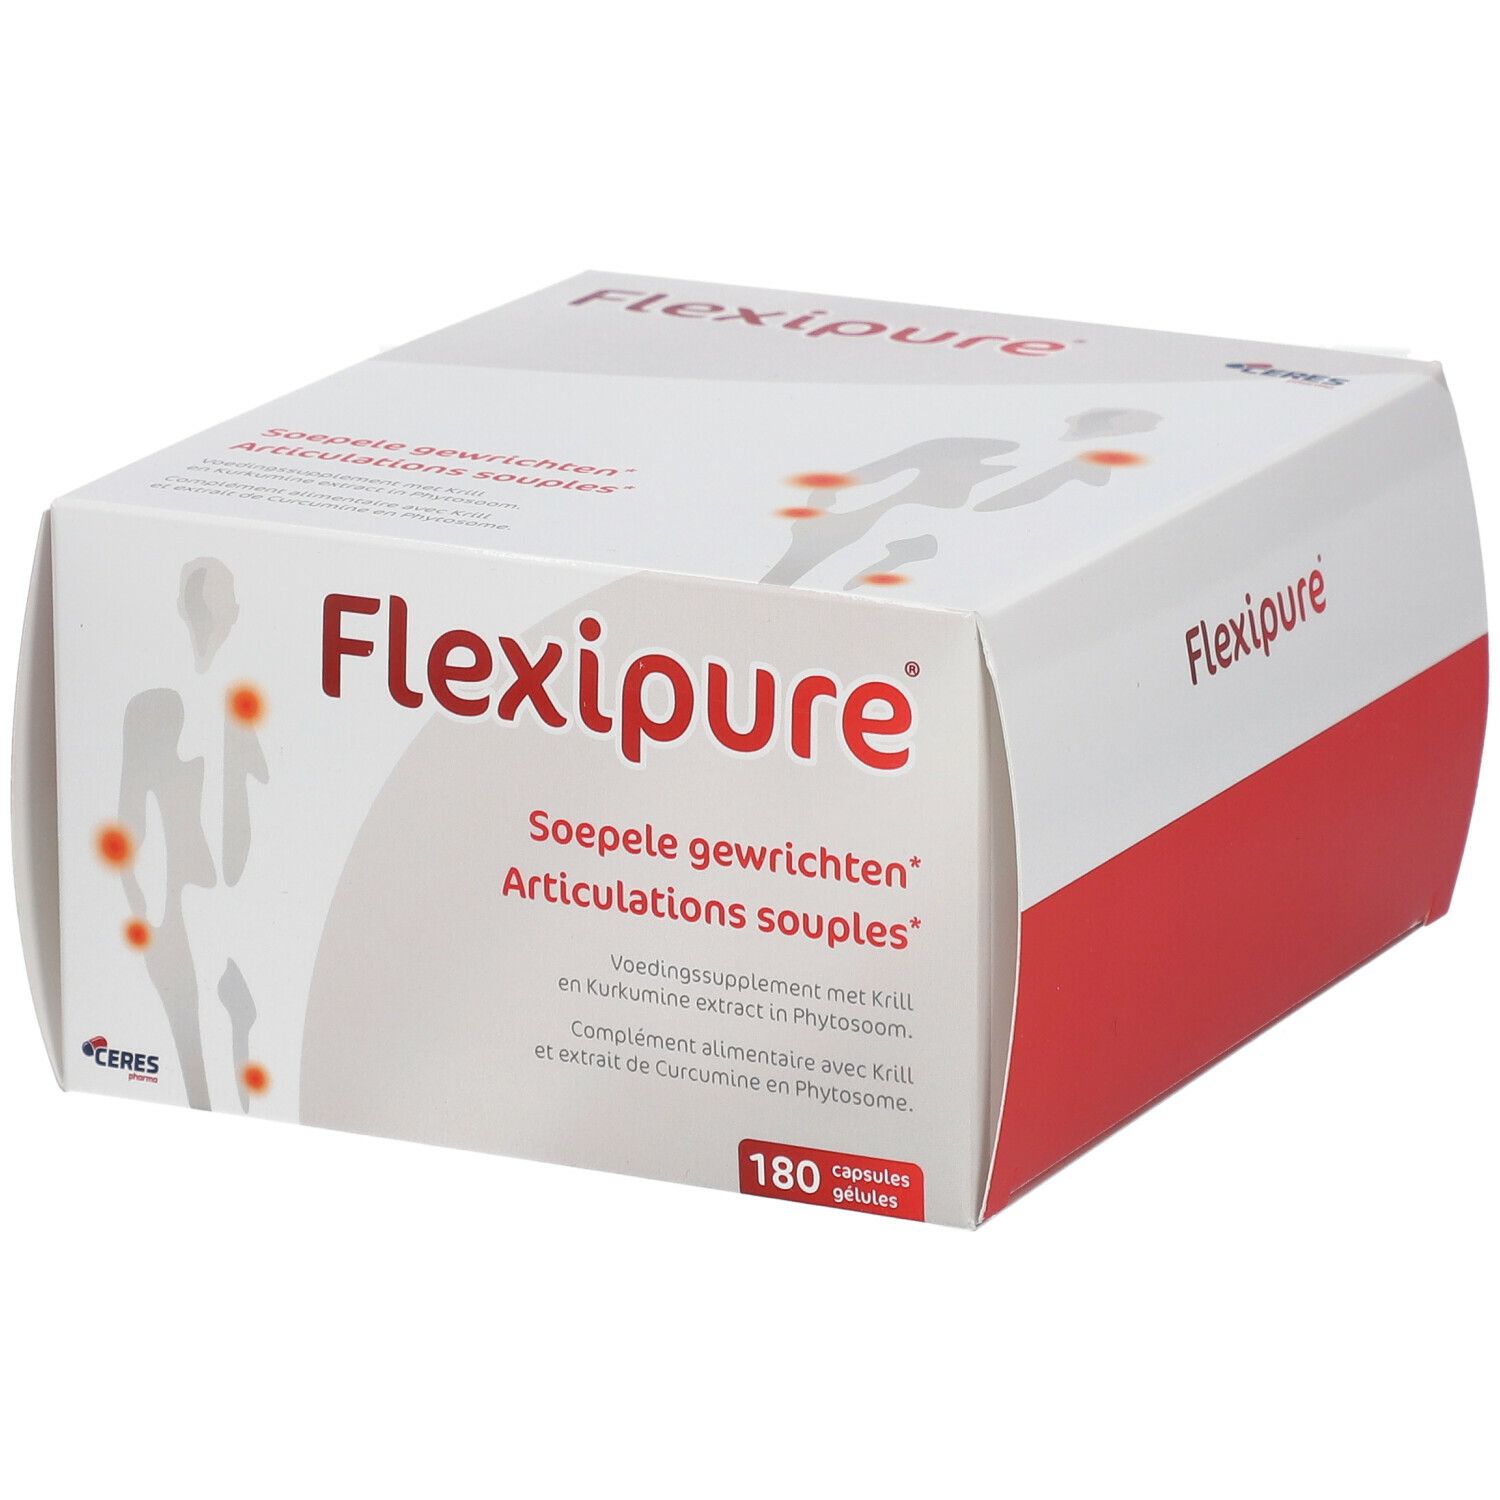 FlexiPure® Articulations souples